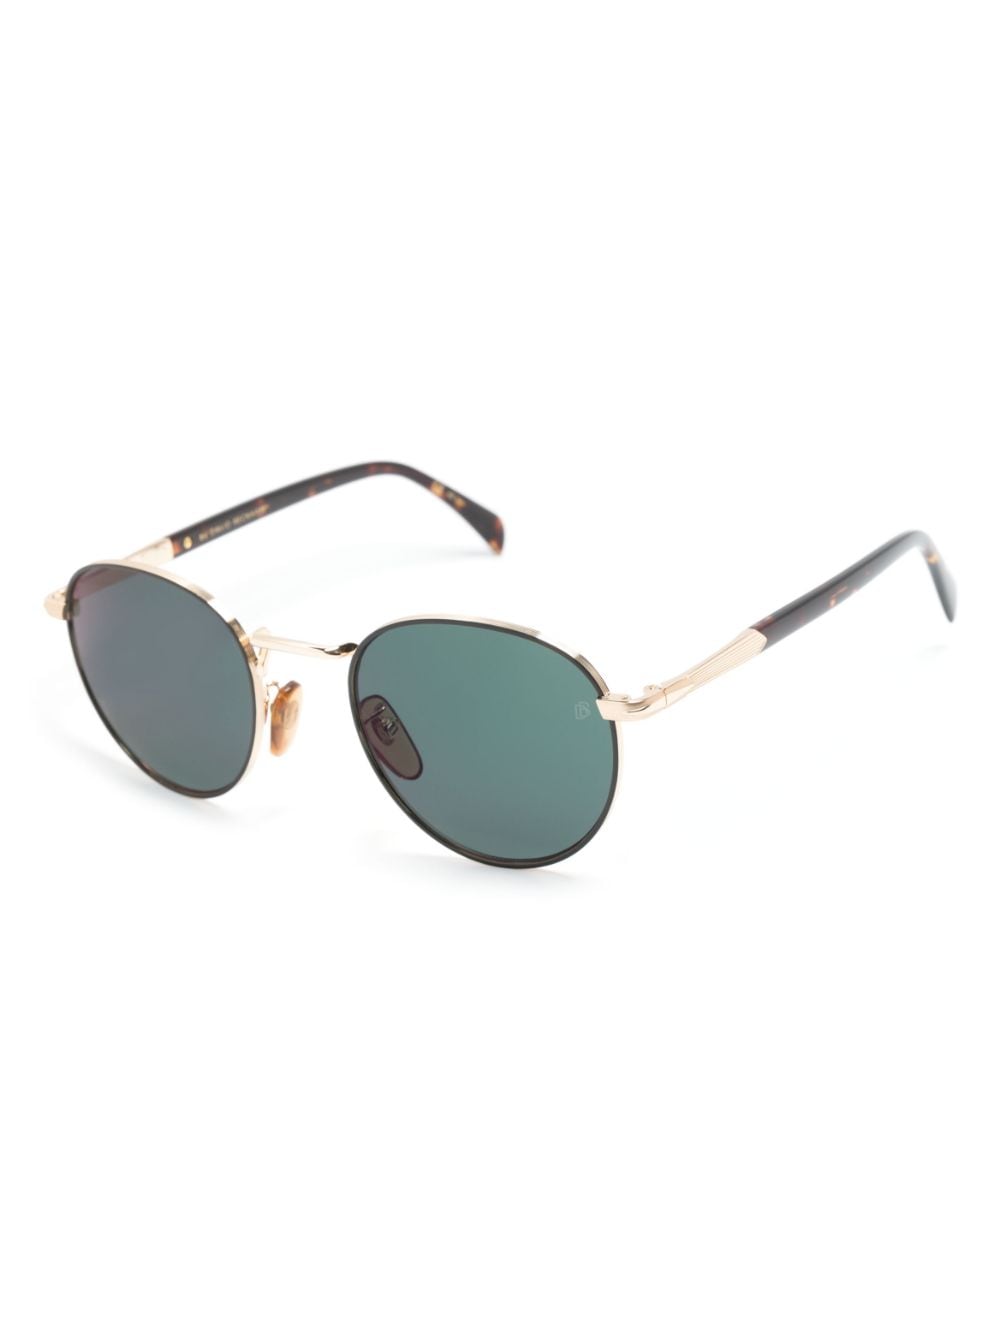 Eyewear by David Beckham round-frame tortoiseshell sunglasses - Goud